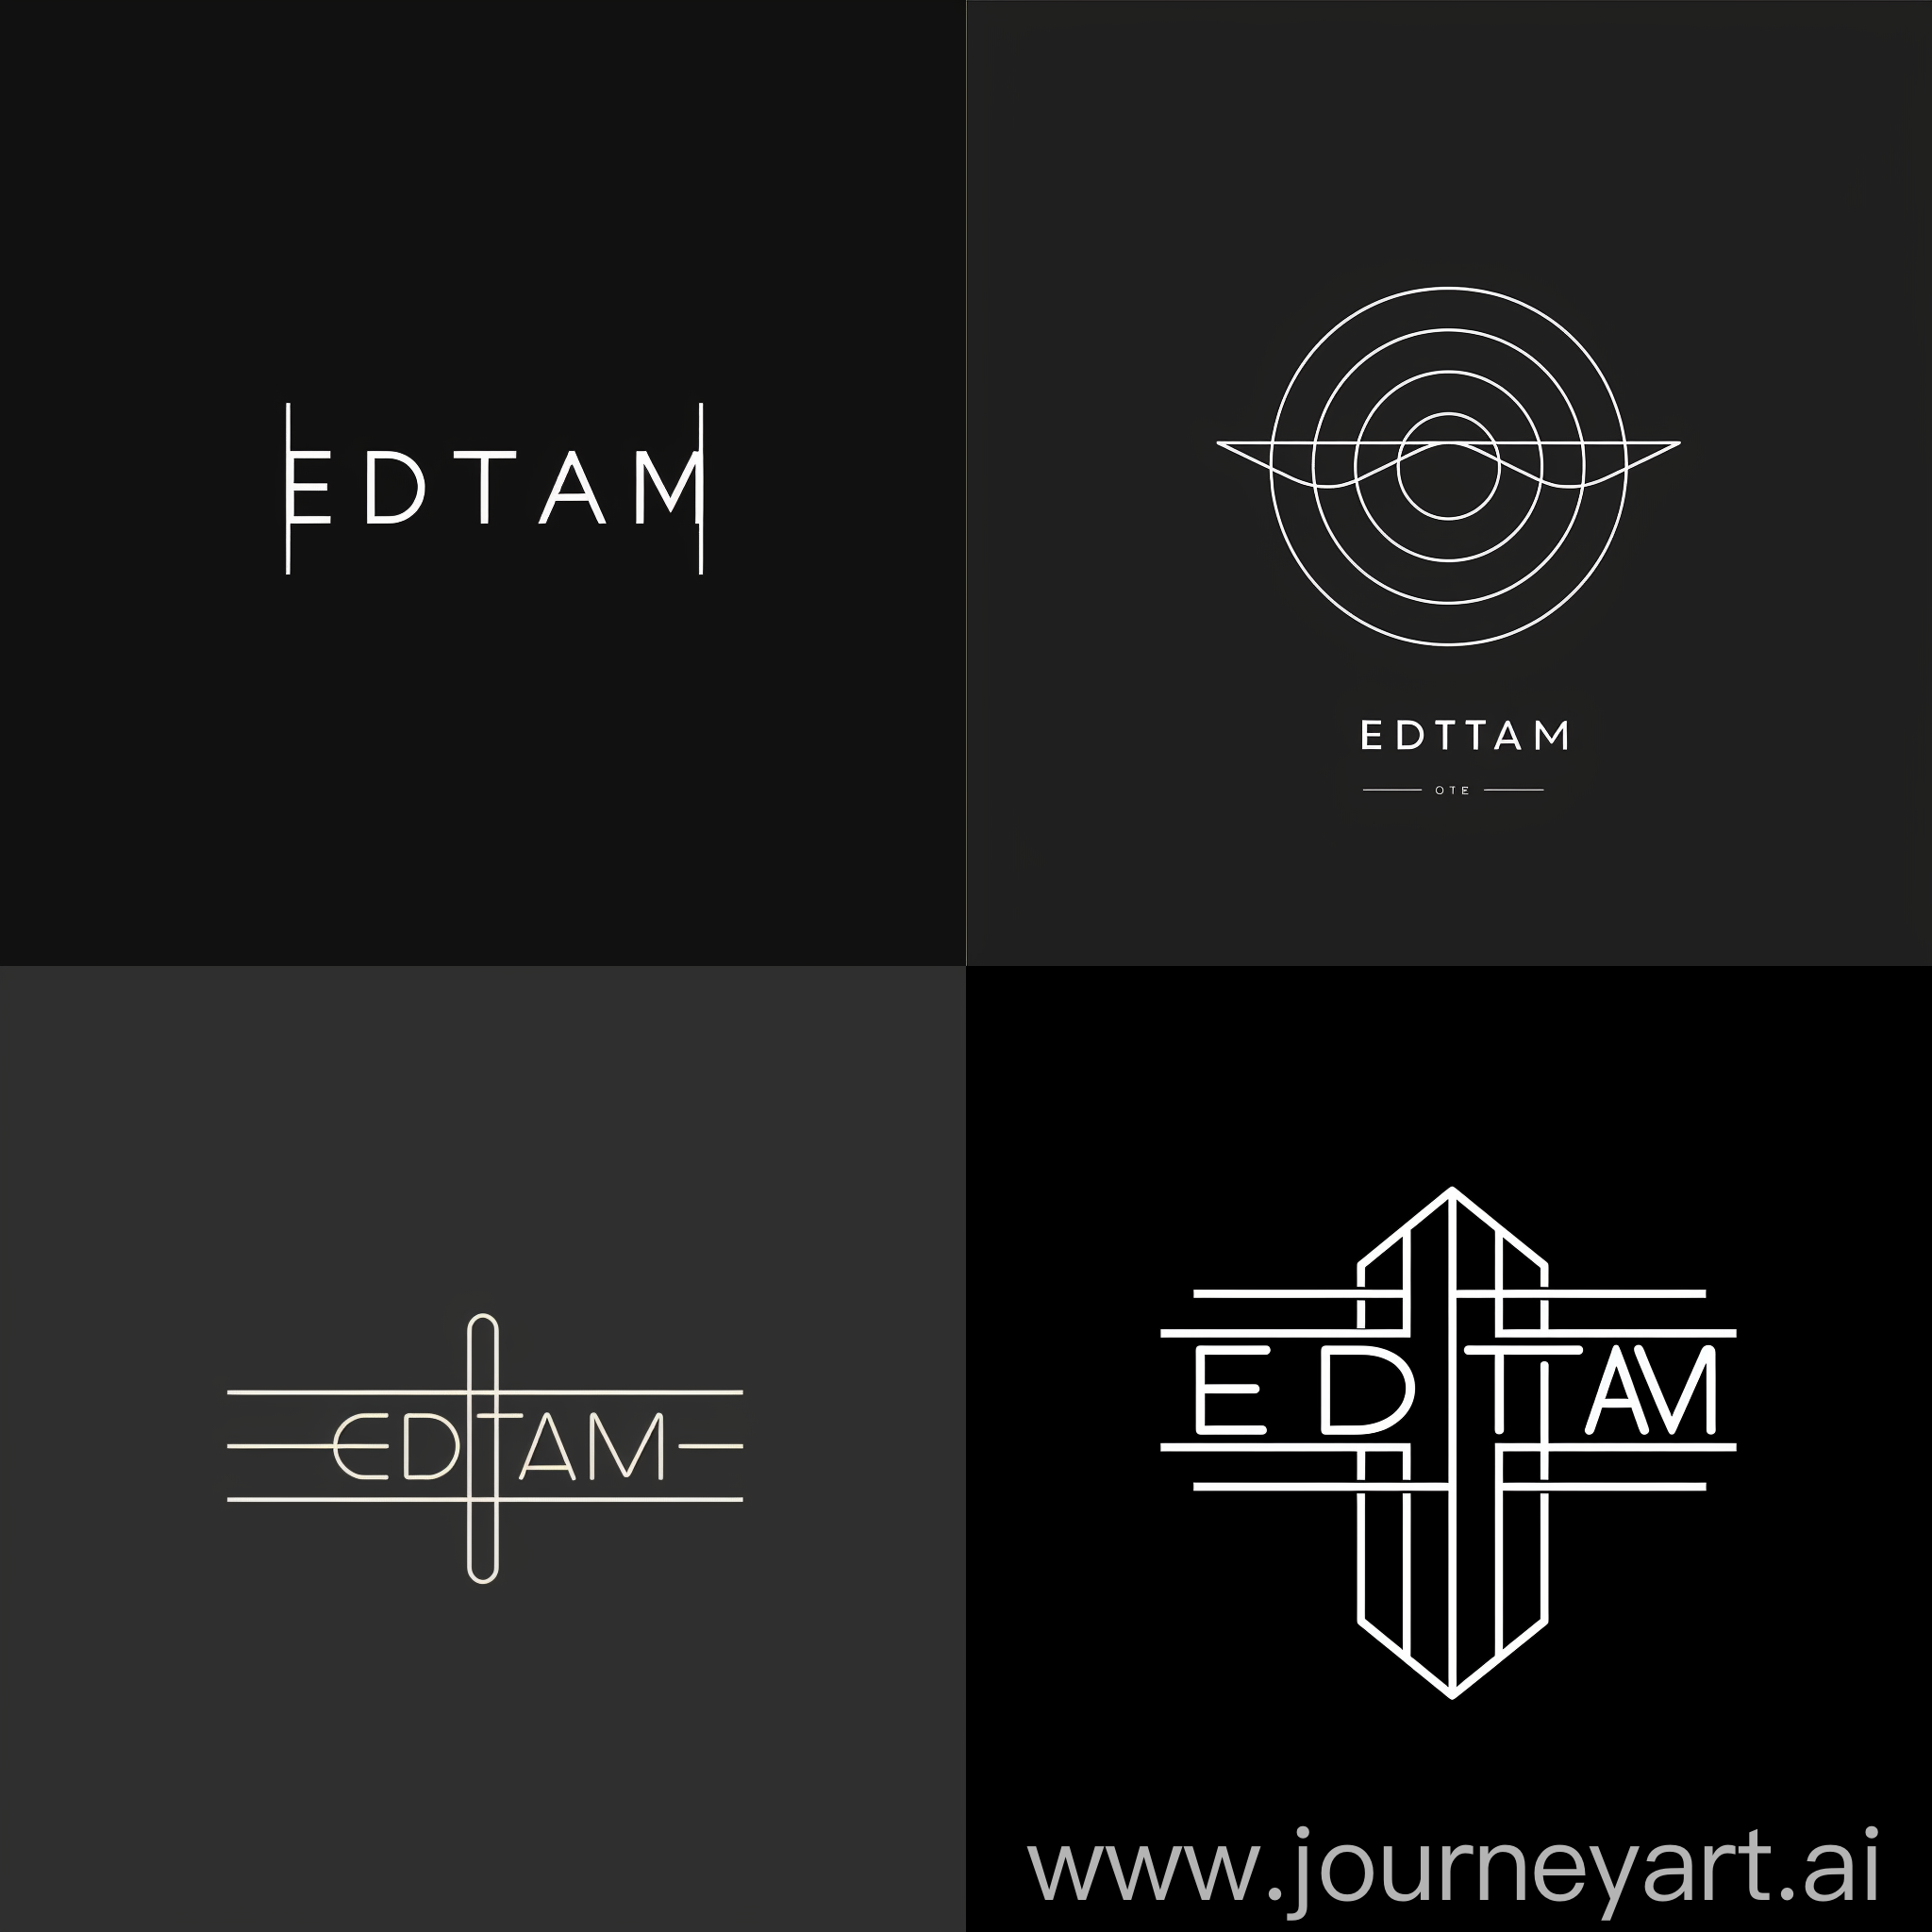 Minimalistic simple "EDTAM" logo or watermark